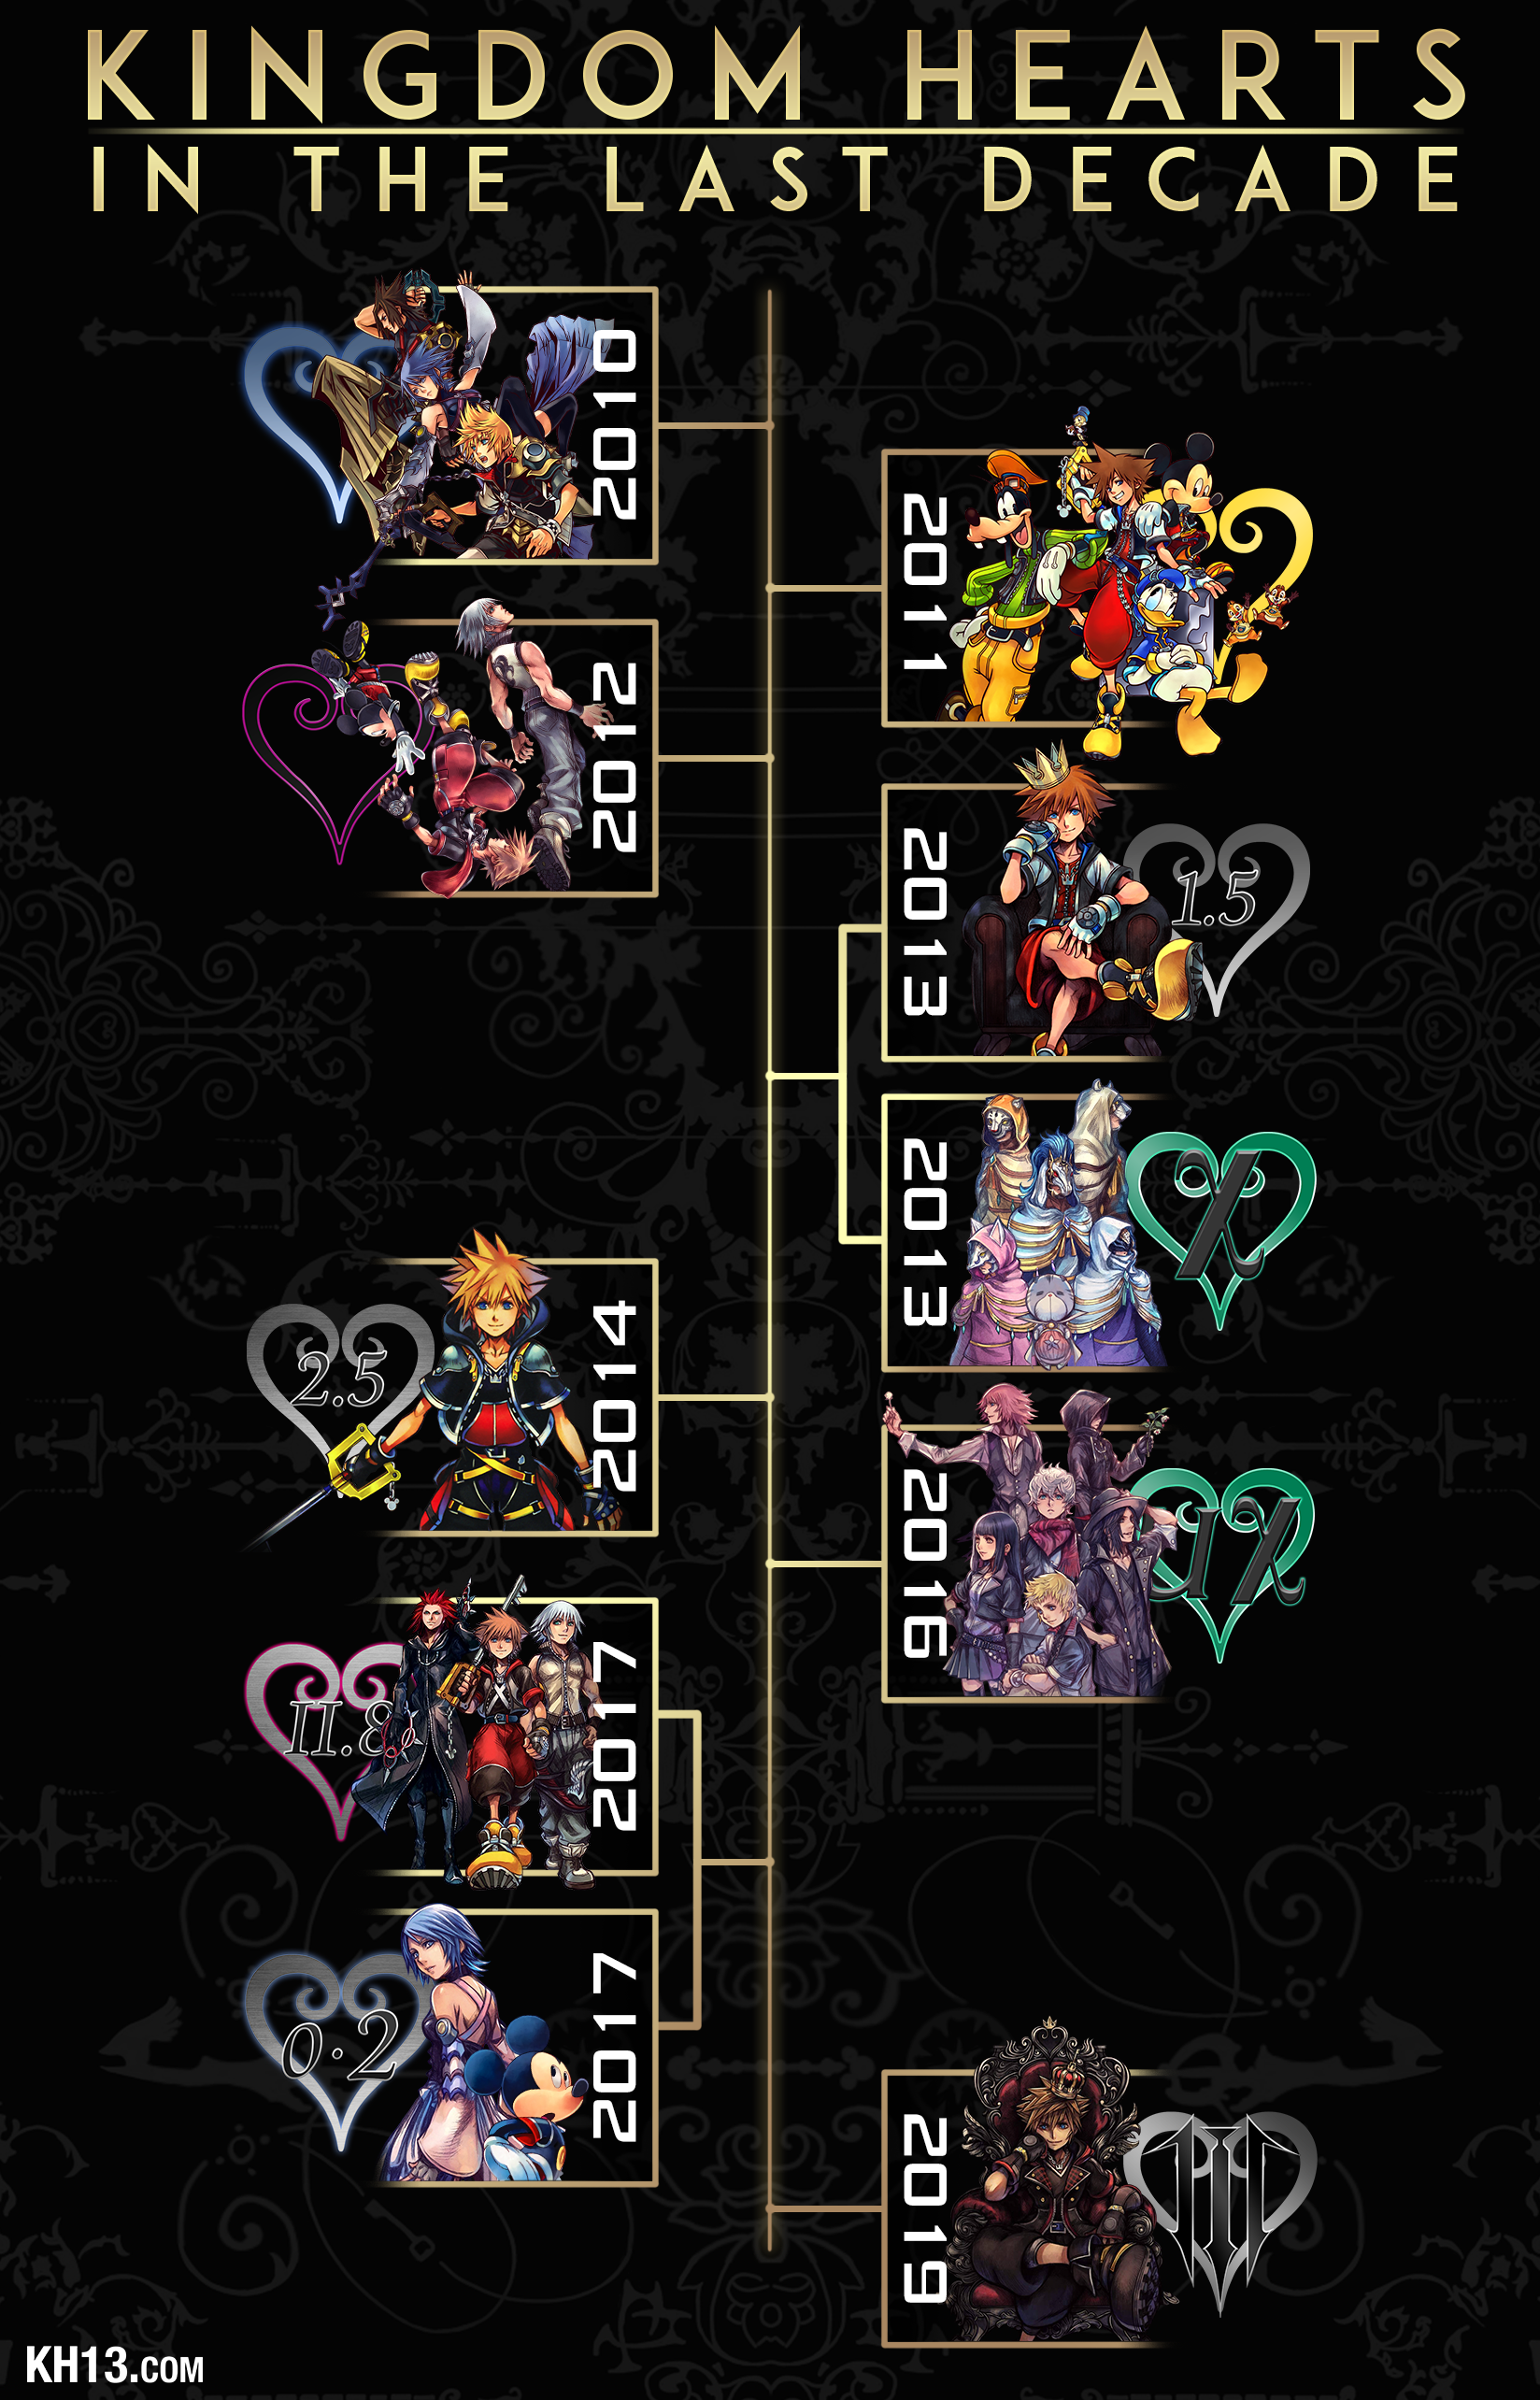 Square enix PS4 Kingdom Hearts 3 Import PAL Multicolor